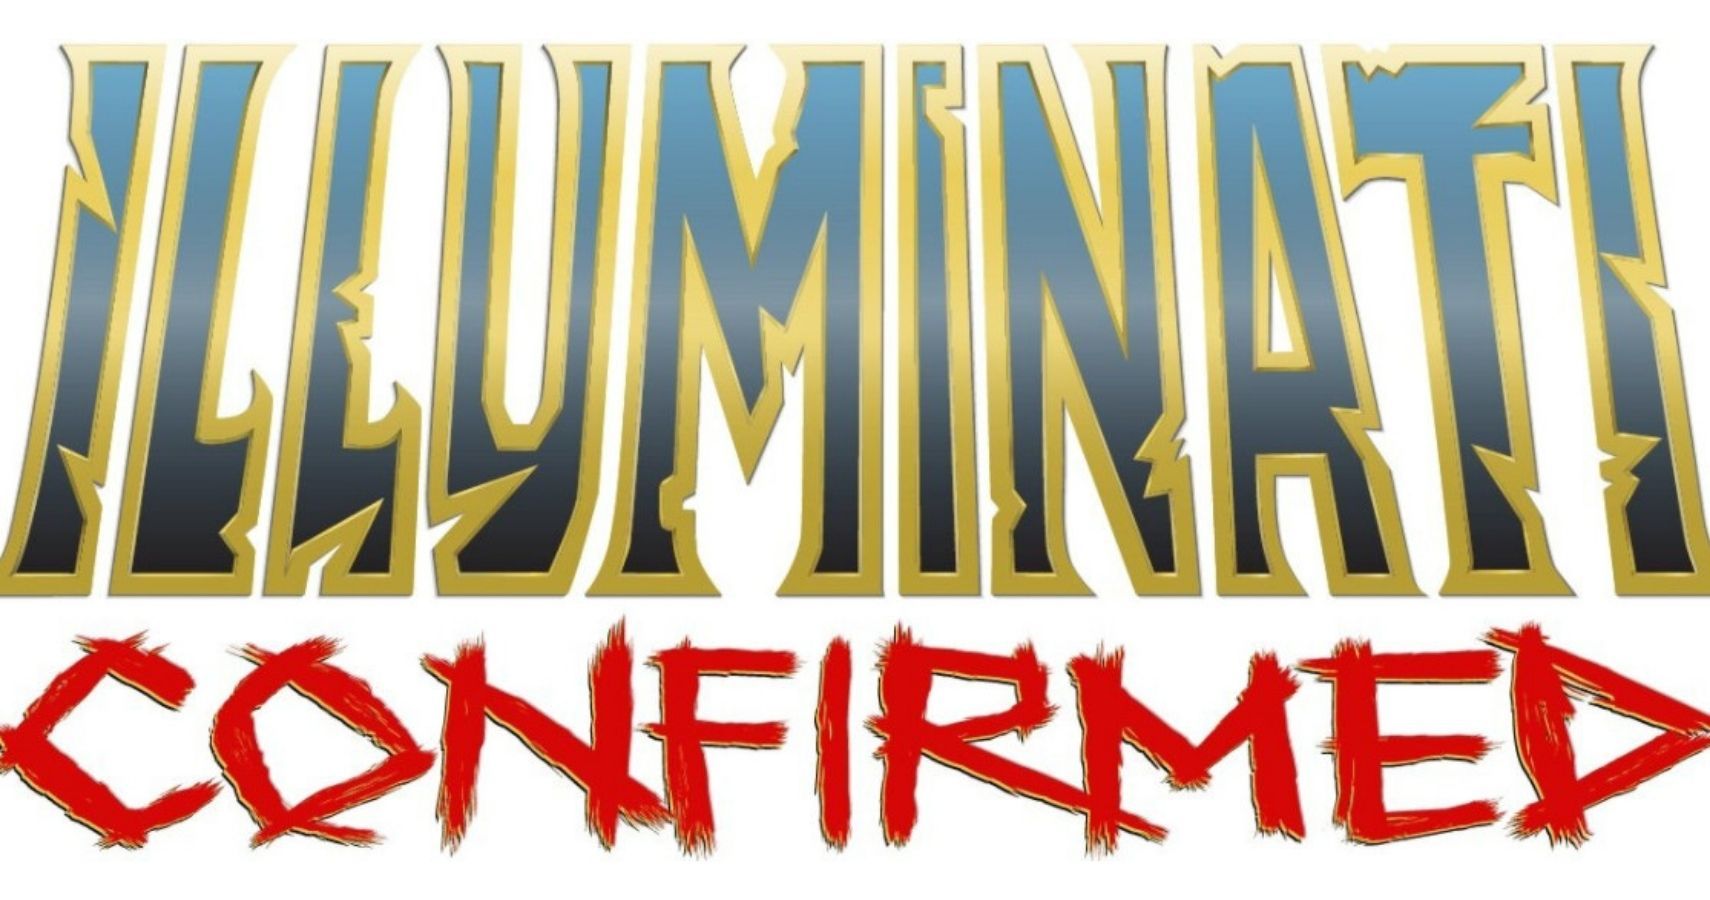 Illuminati Confirmed Video Game Kickstarter feature image